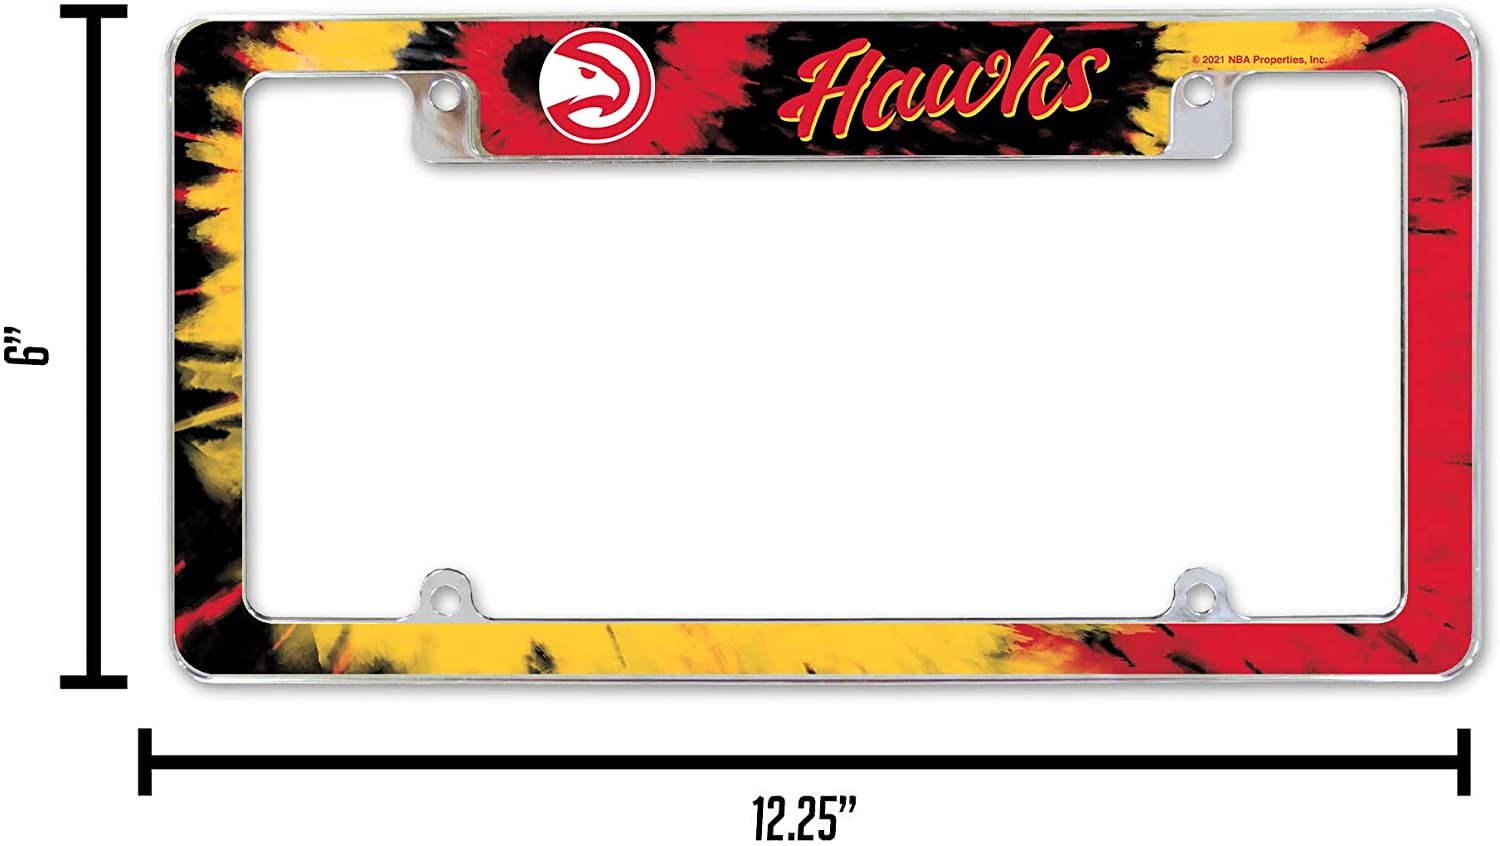 Atlanta Hawks Metal License Plate Frame Chrome Tag Cover Tie Dye Design 6x12 Inch